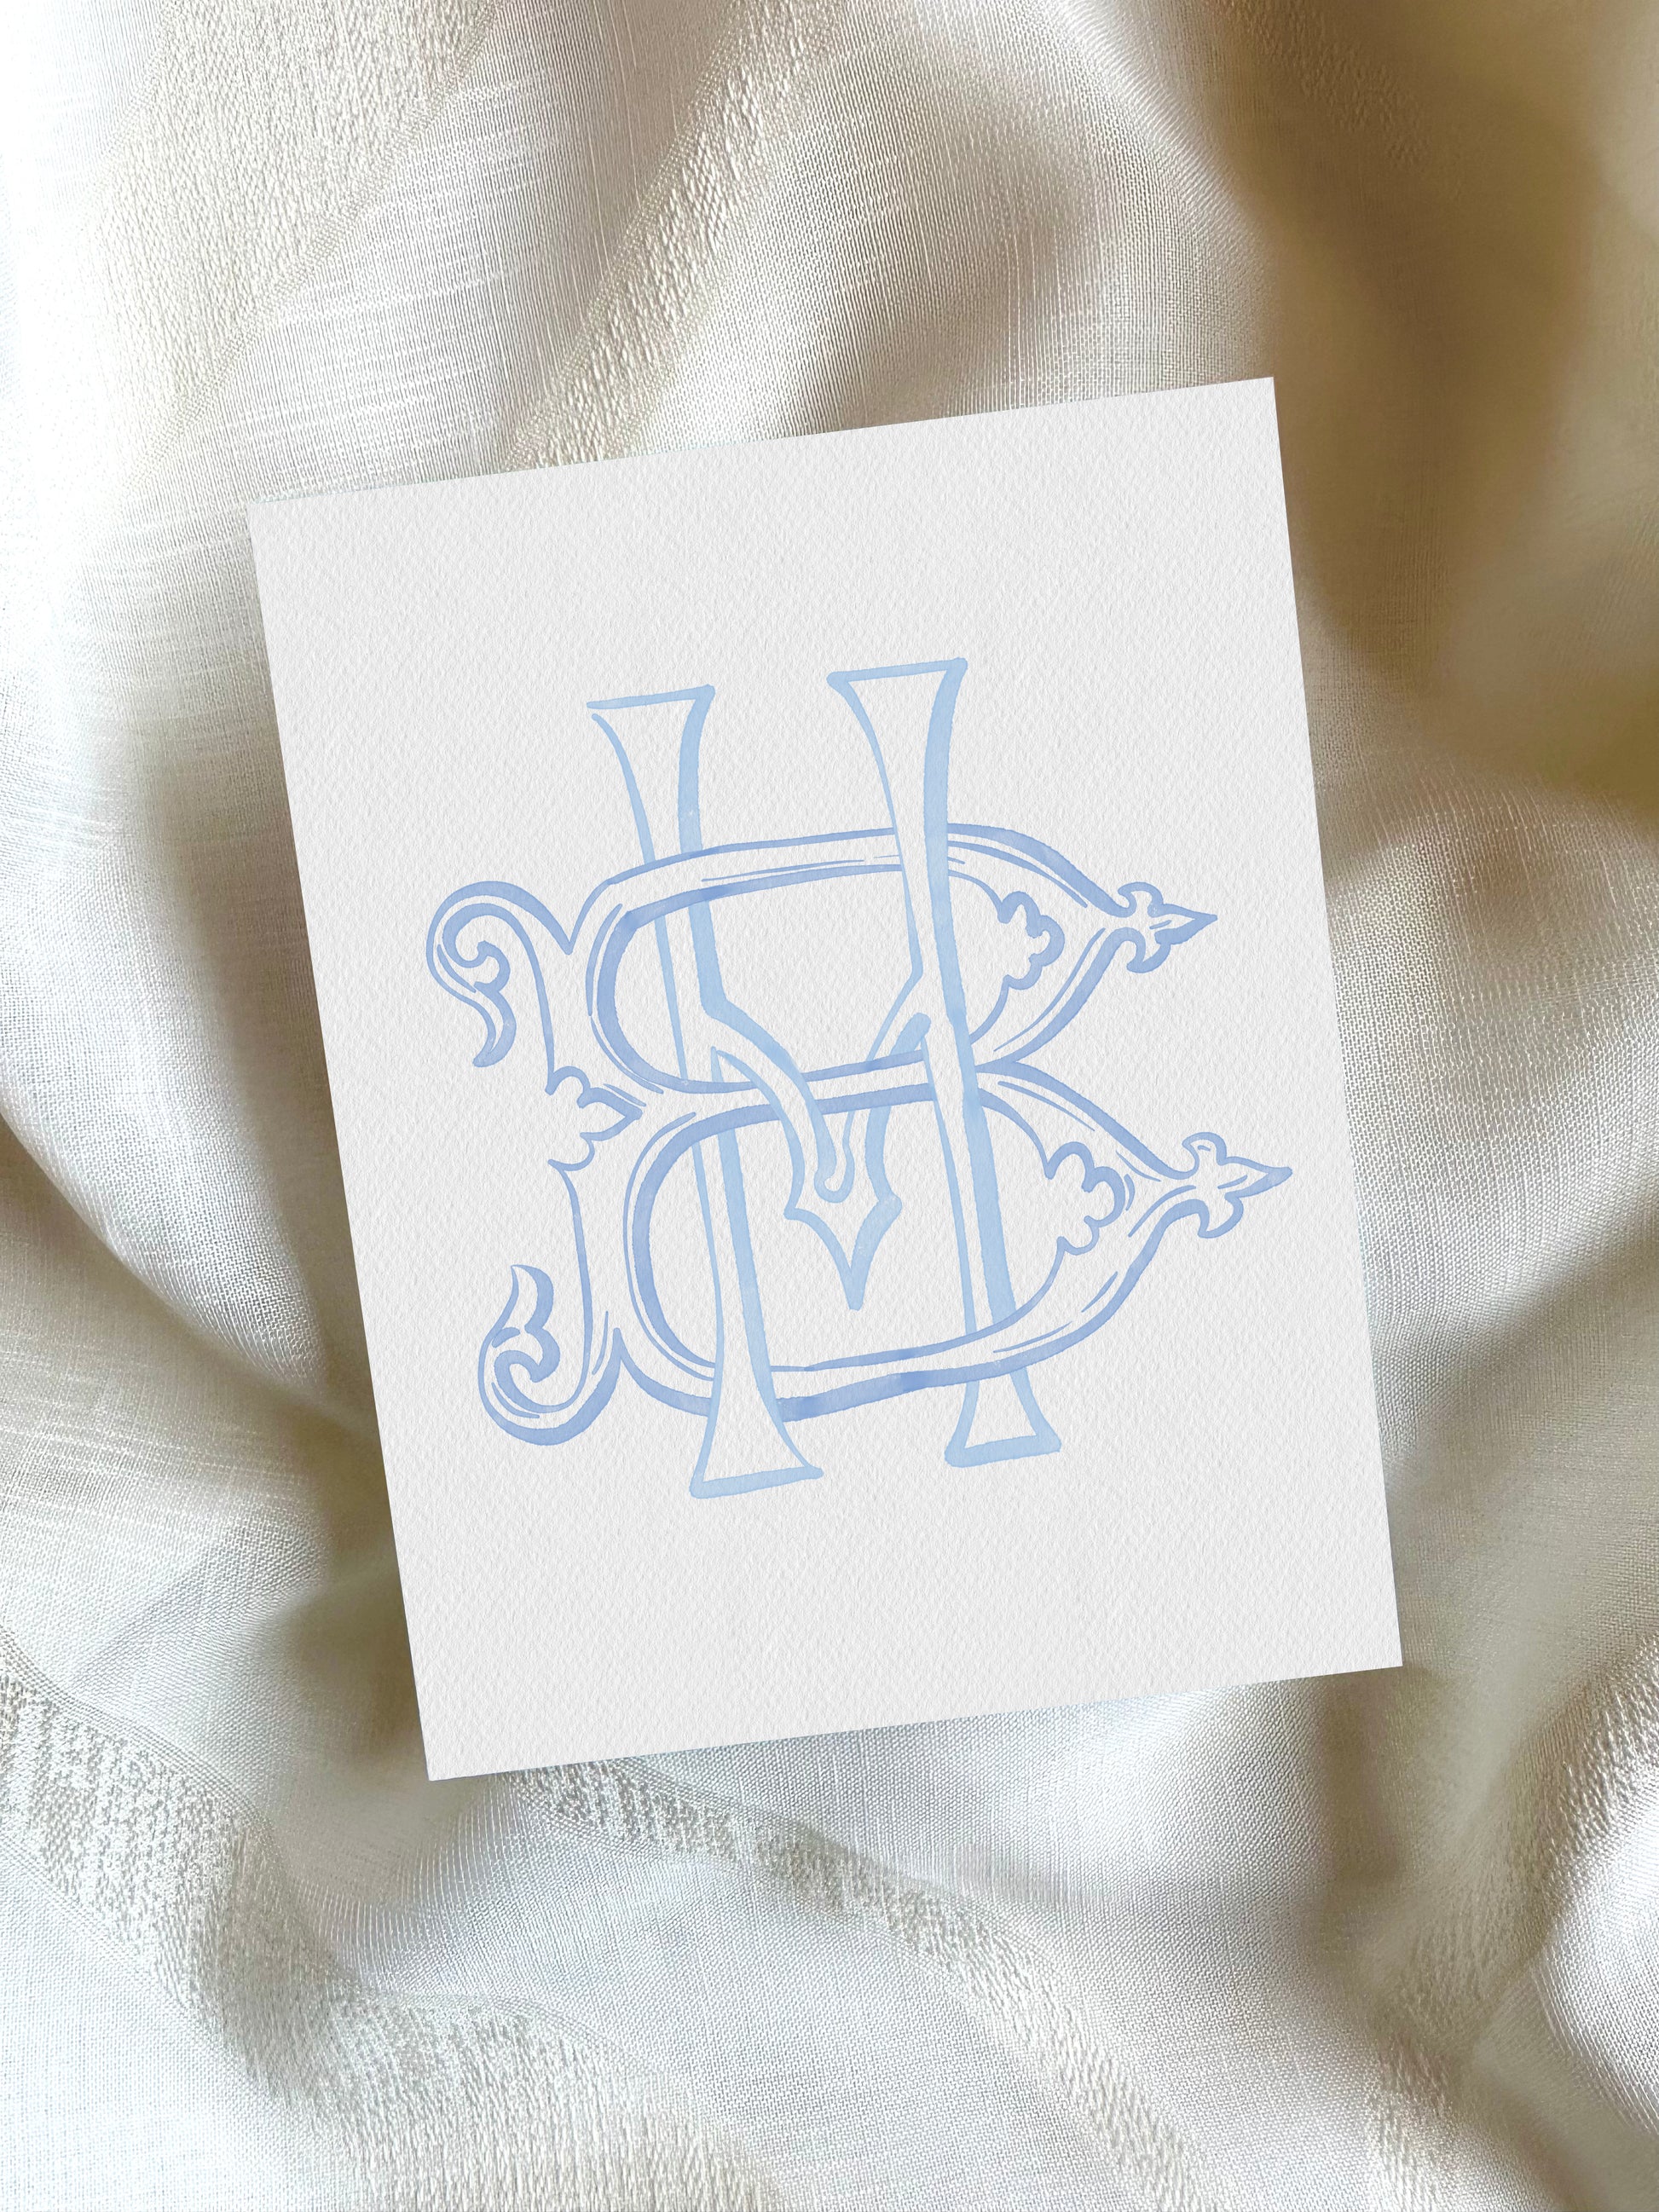 2 Letter Monogram with Letters BH | Digital Download - Wedding Monogram SVG, Personal Logo, Wedding Logo for Wedding Invitations The Wedding Crest Lab